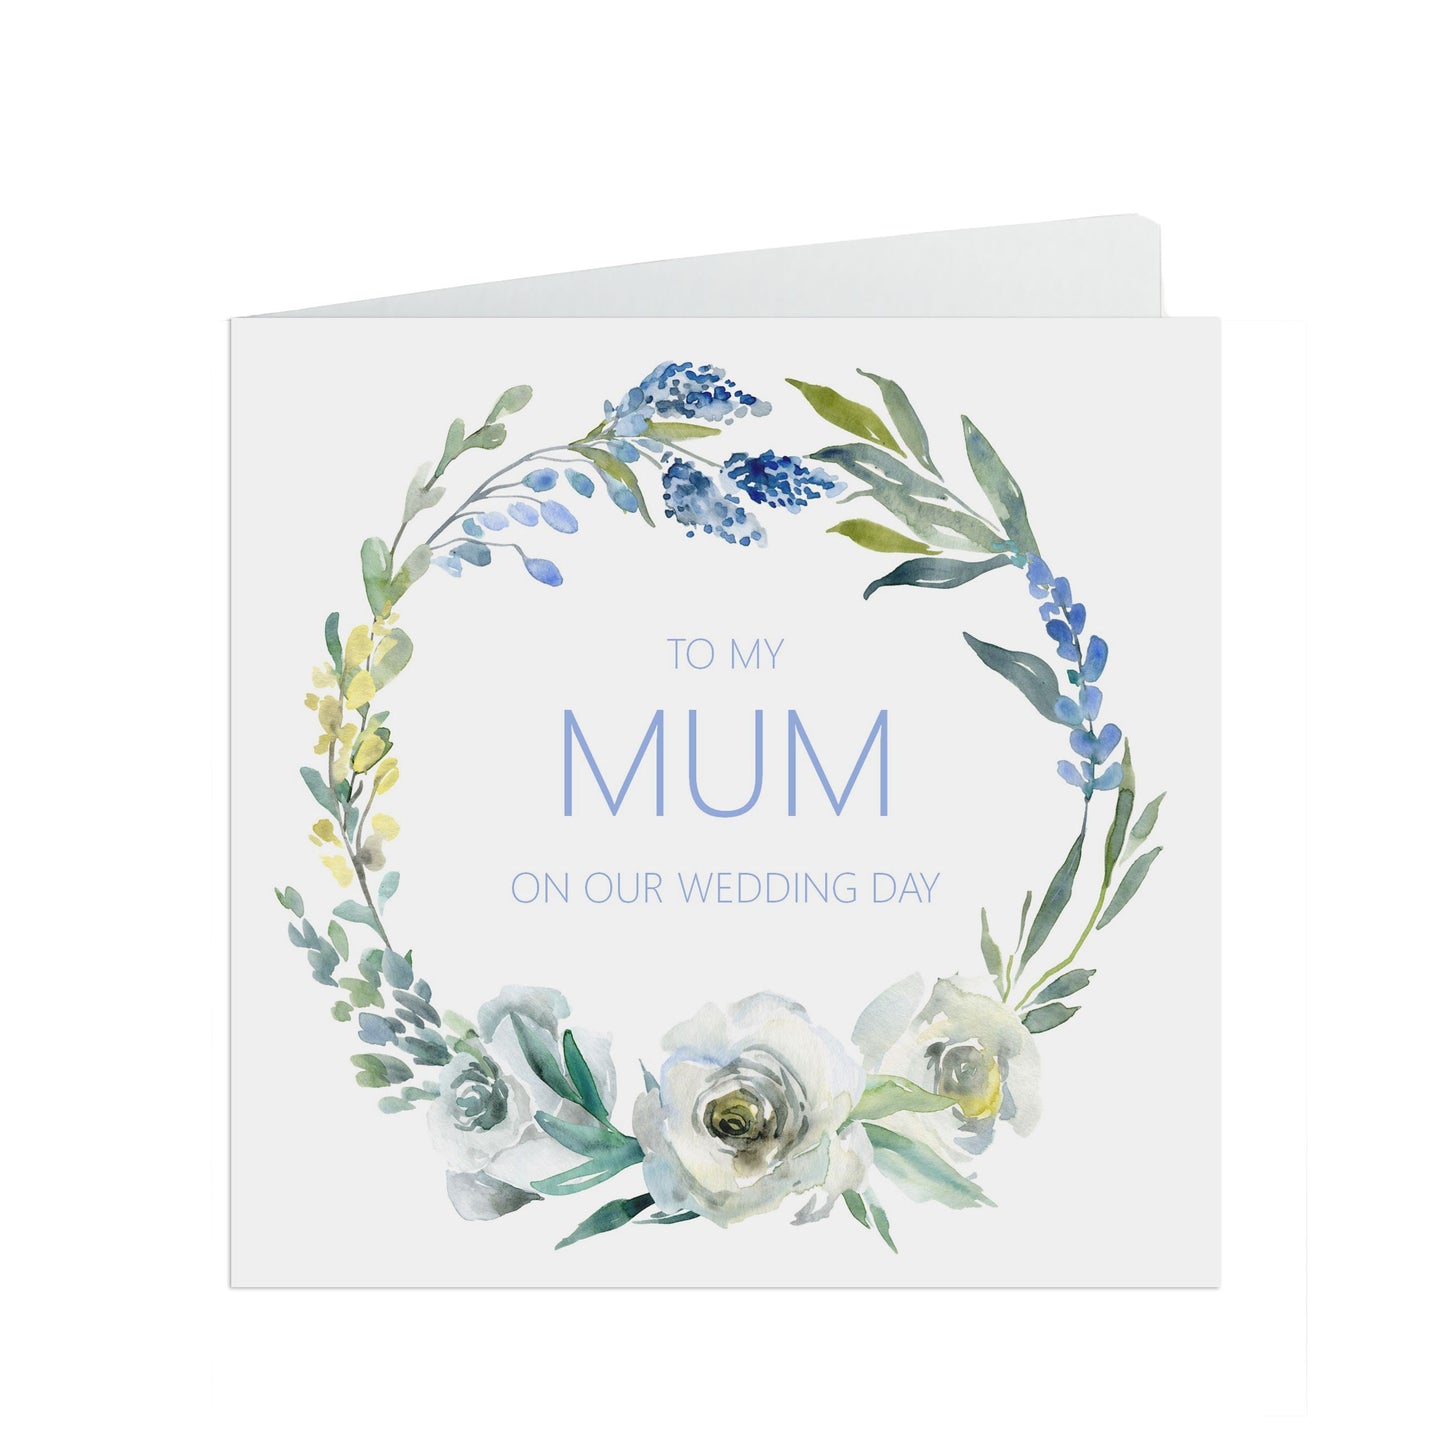 Mum Wedding Day Card - Blue Floral